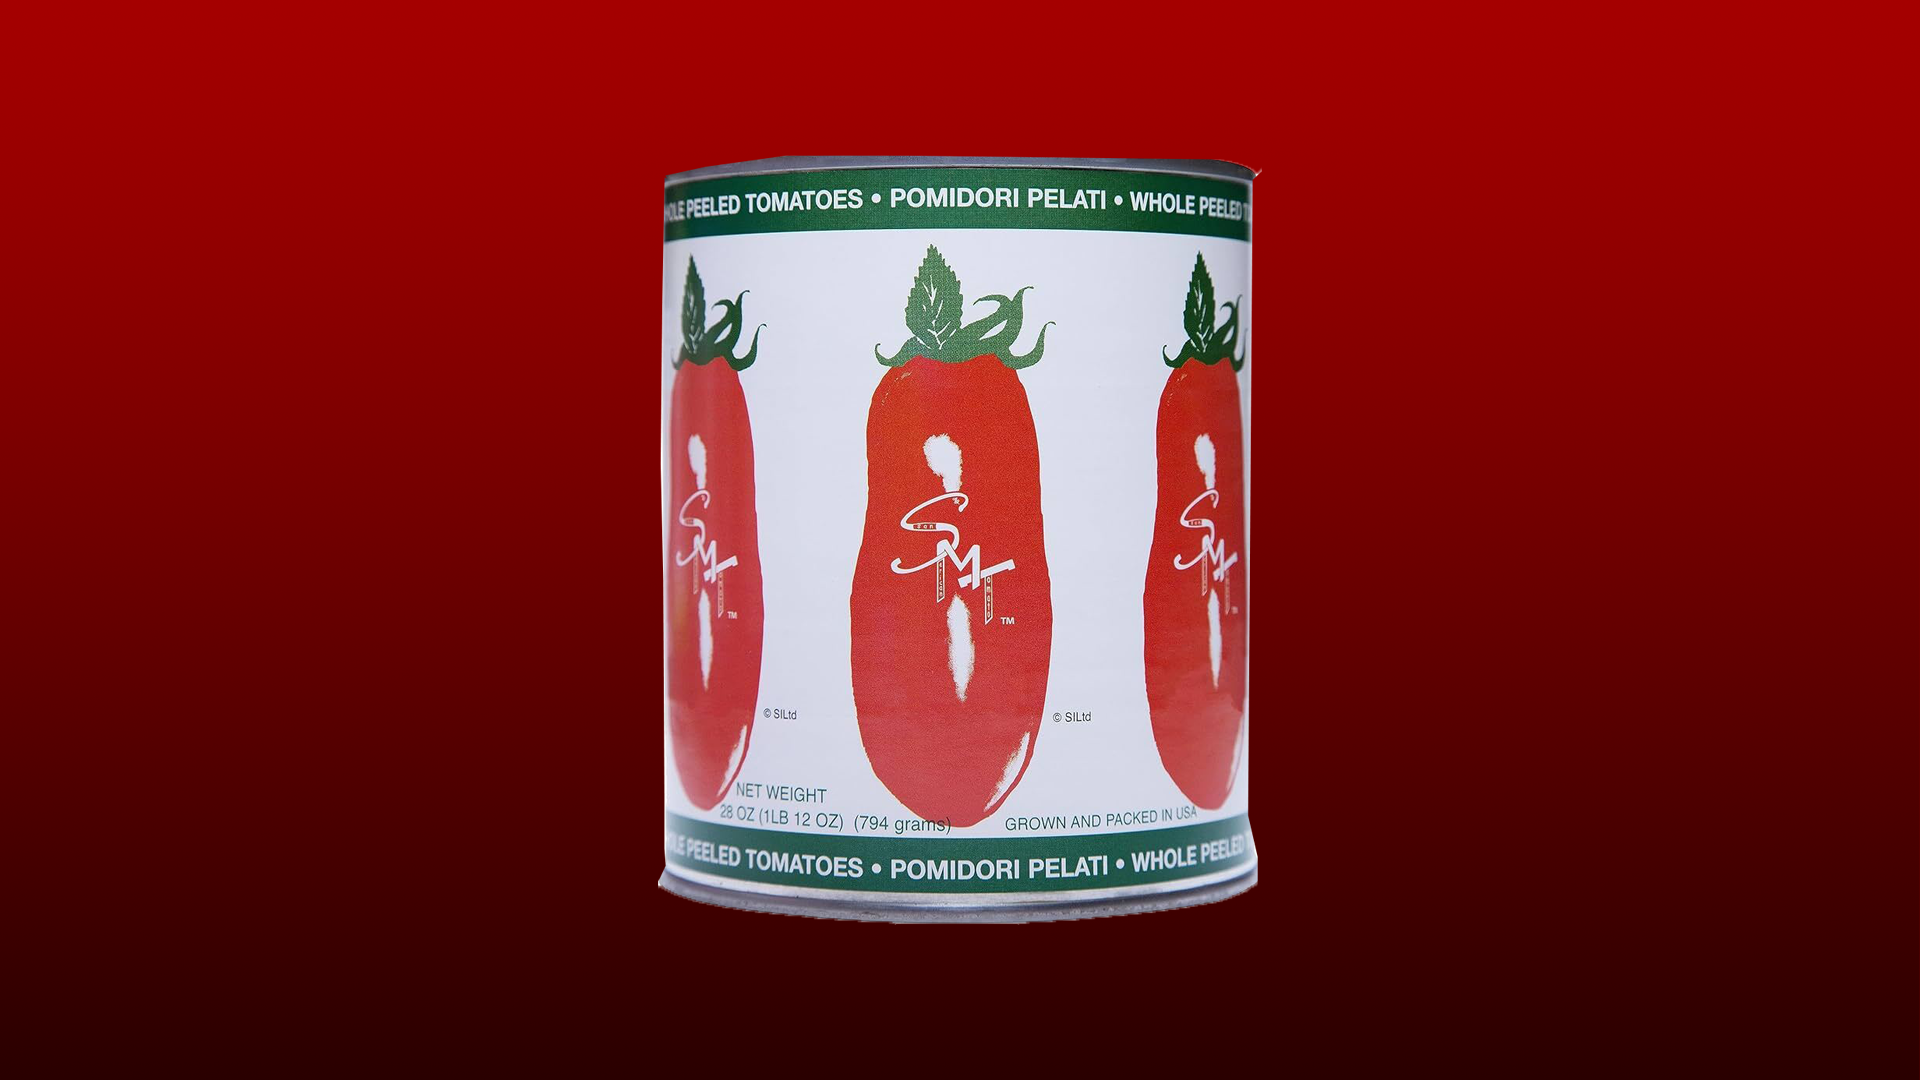 San Merican or San Marzano Tomatoes? California Woman Files Lawsuit Over Misleading Packaging